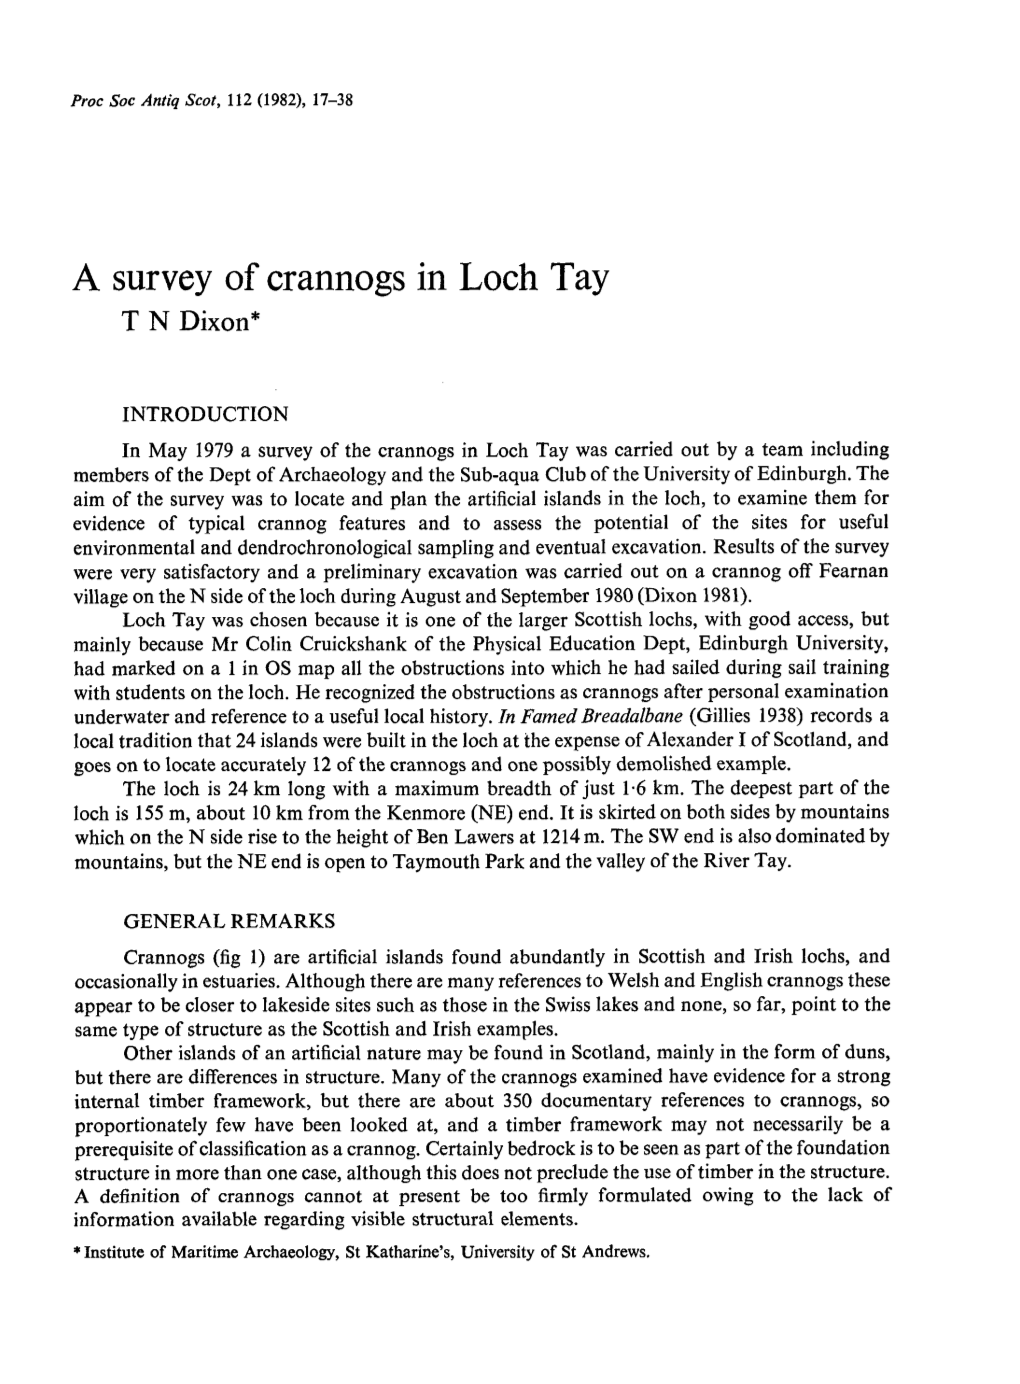 A Survey of Crannogs in Loch Tay T N Dixon*